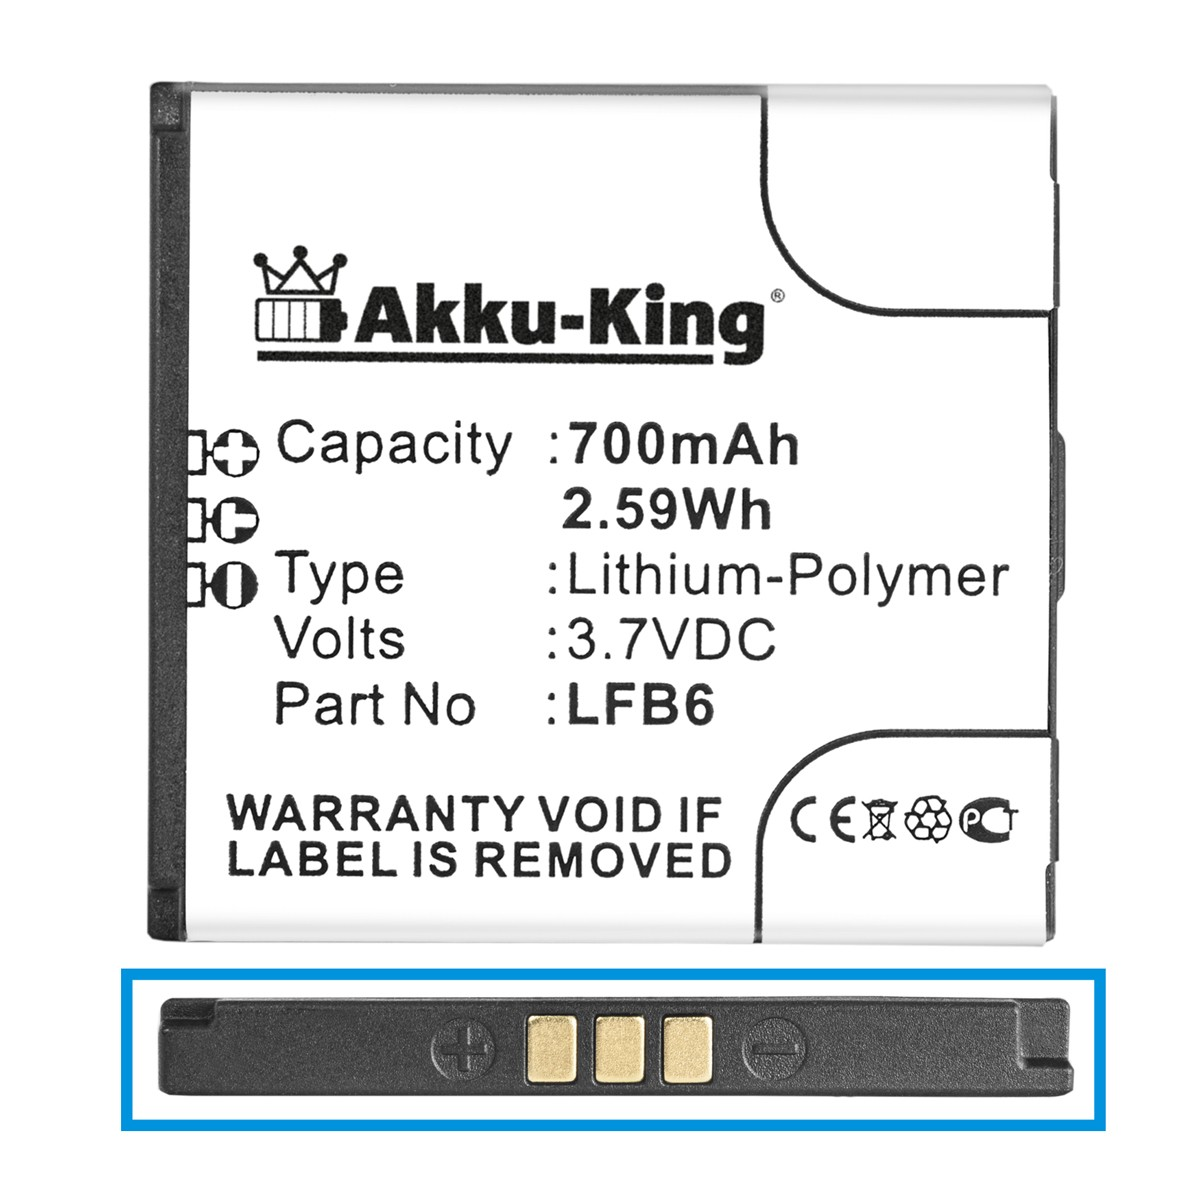 AKKU-KING Akku LFB6 Handy-Akku, Kazam kompatibel 700mAh Li-Ion mit Volt, 3.7